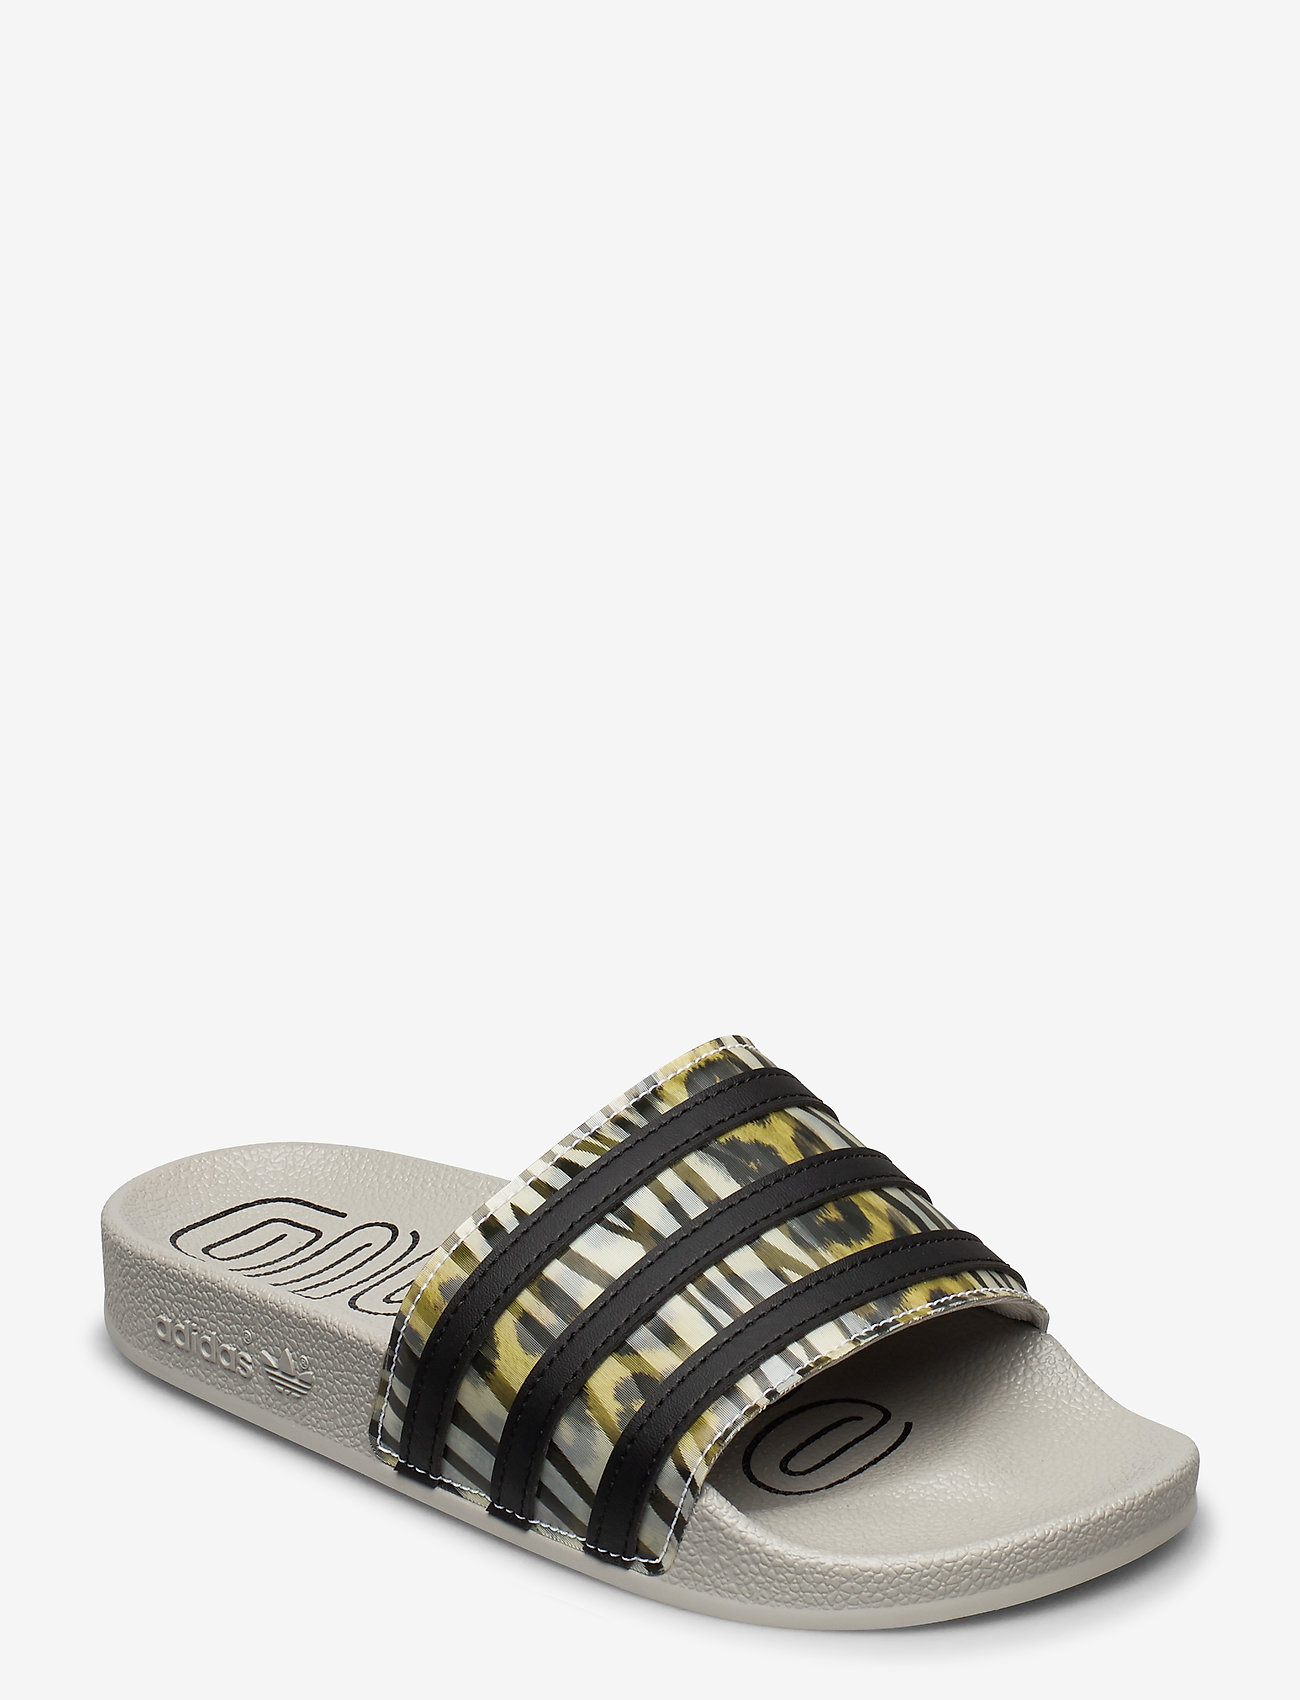 Adilette W (Cblack/cblack/metgry) (29.98 €) - adidas Originals - | Boozt.com